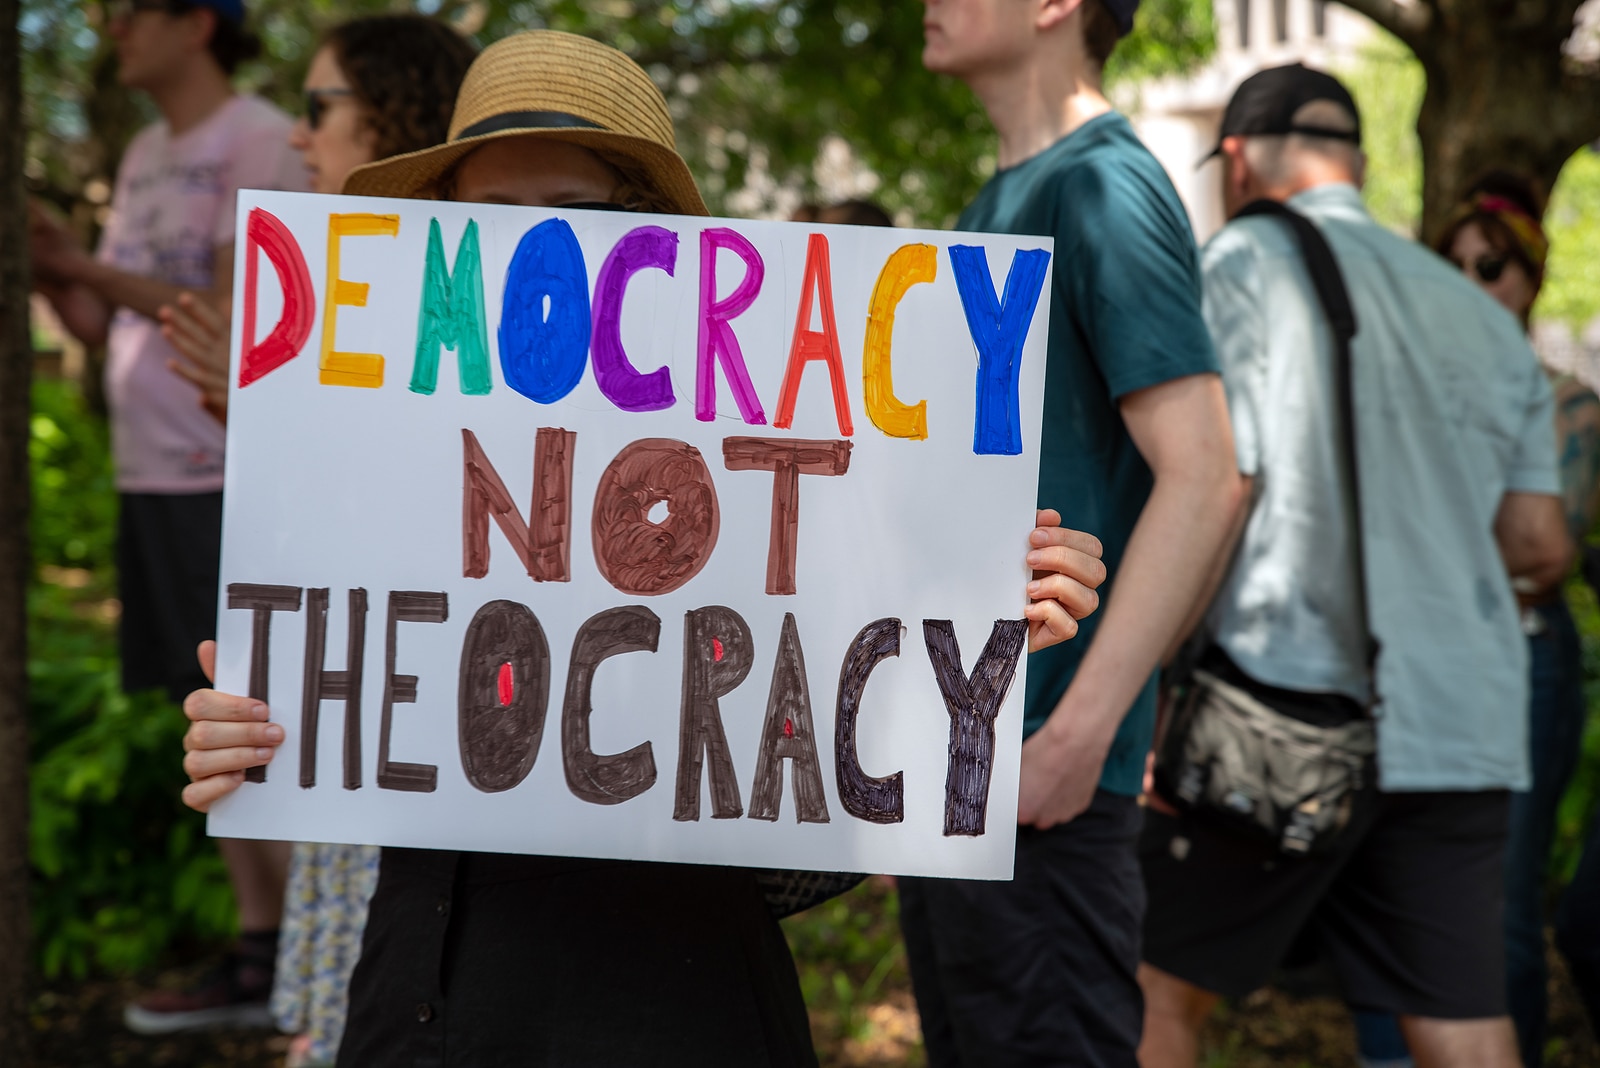 Democracy not theocracy